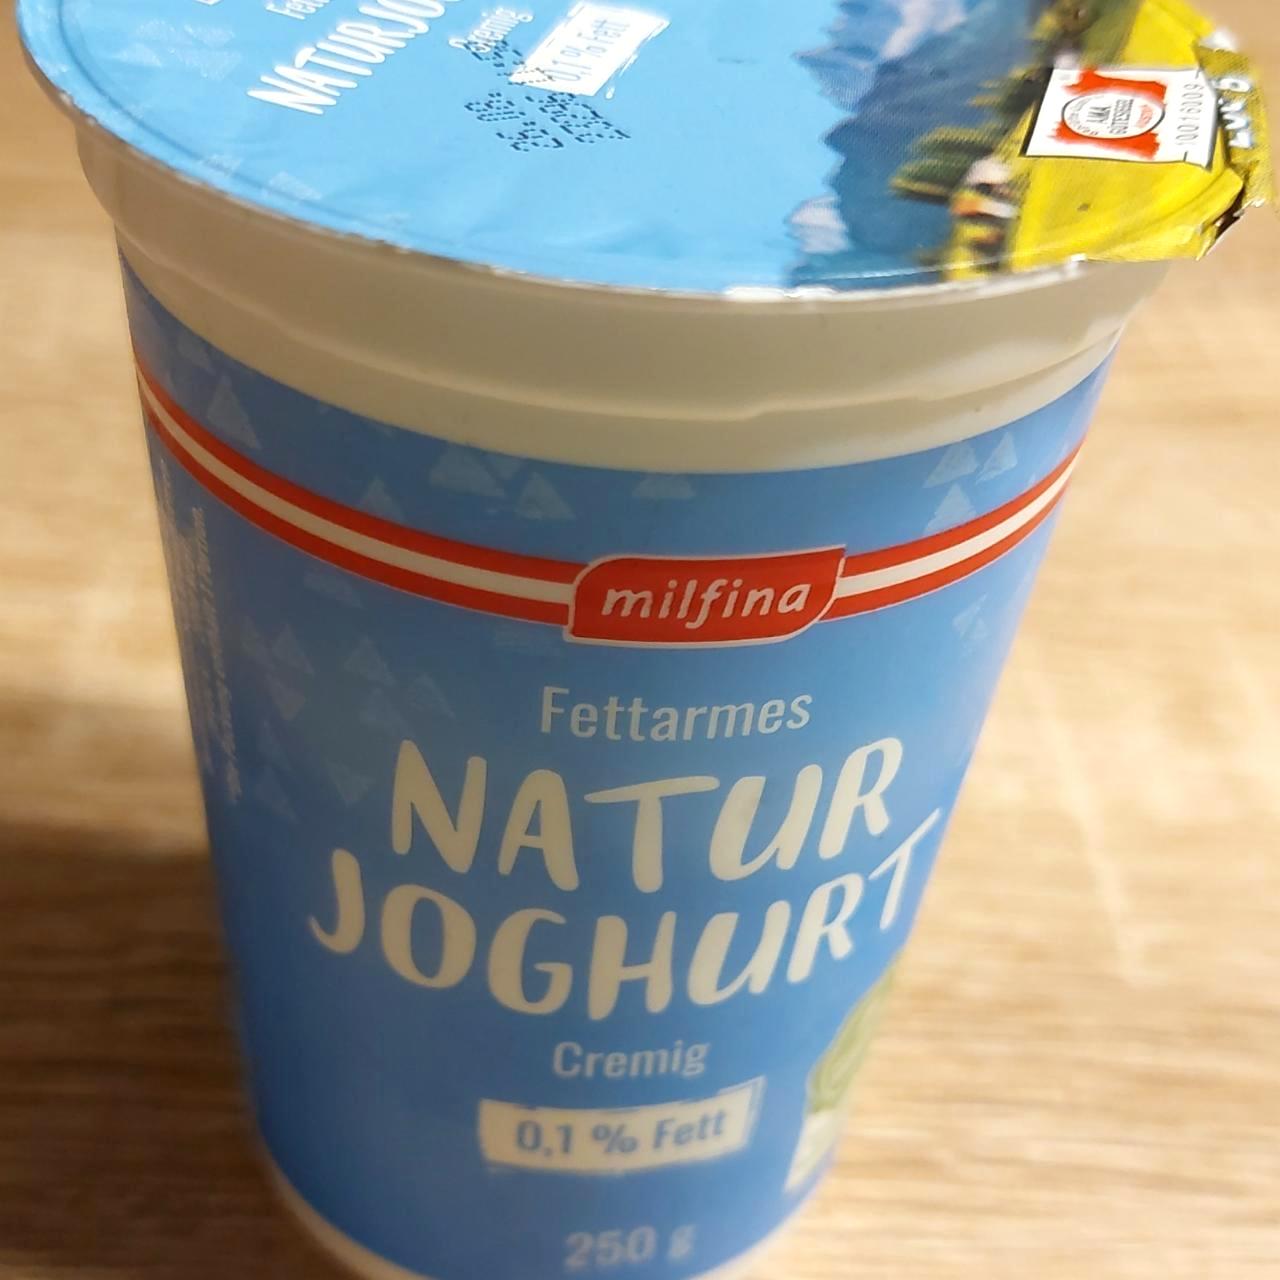 Fotografie - Joghurt cremig 0,1 % fett Milfina